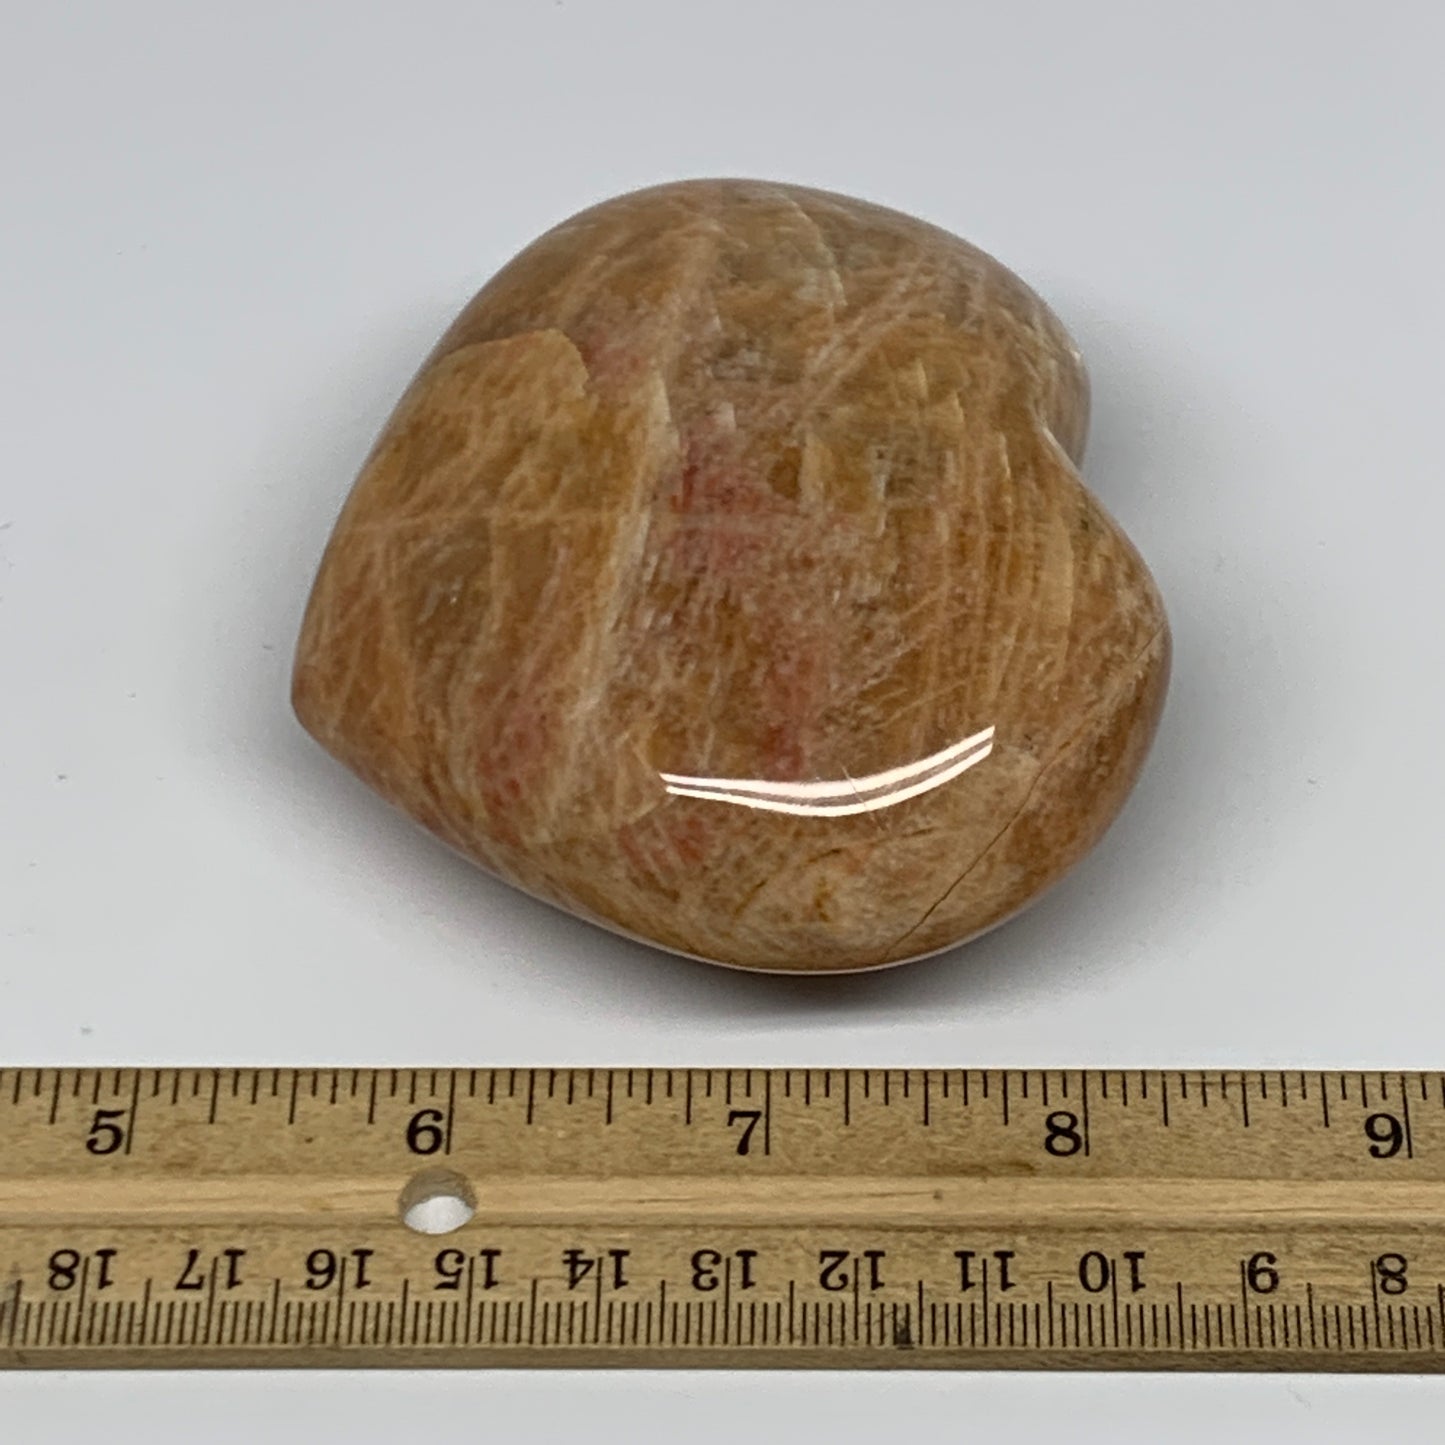 267.5g,2.8"x3.3"x1.4", Pink Peach Moonstone Heart Crystal Polished Reiki,B17507